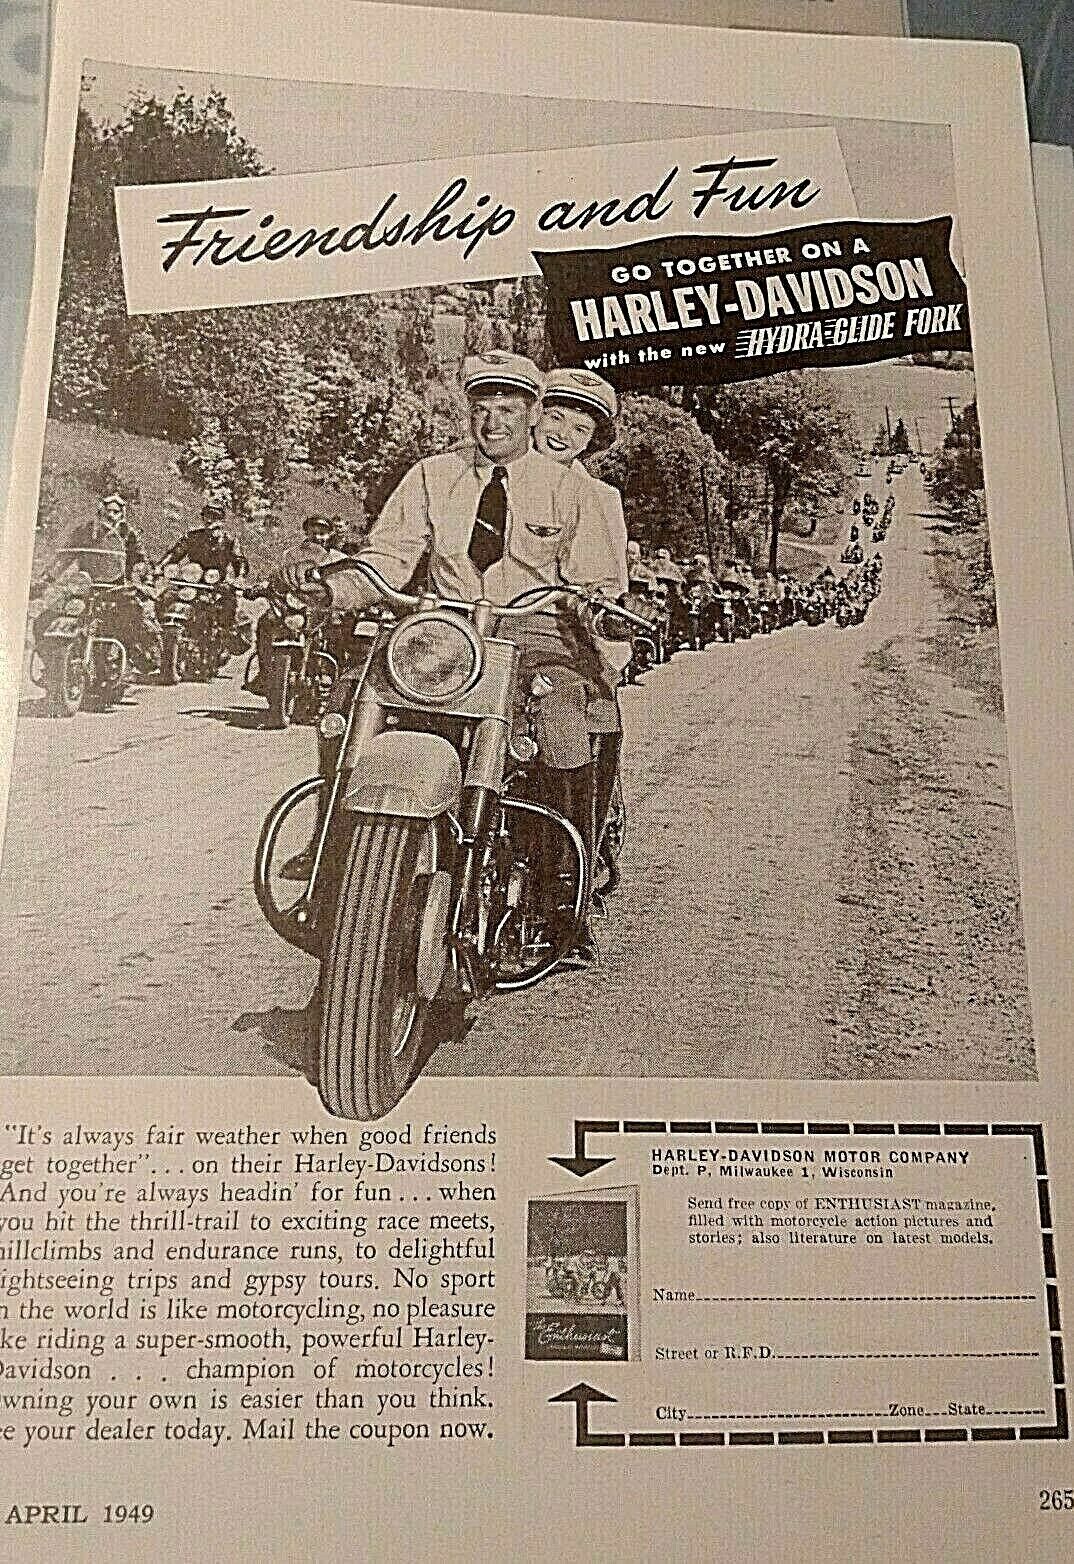 Harley-Davidson Motorcycles *Friendship and Fun* 1949 Vintage magazine Print Ad